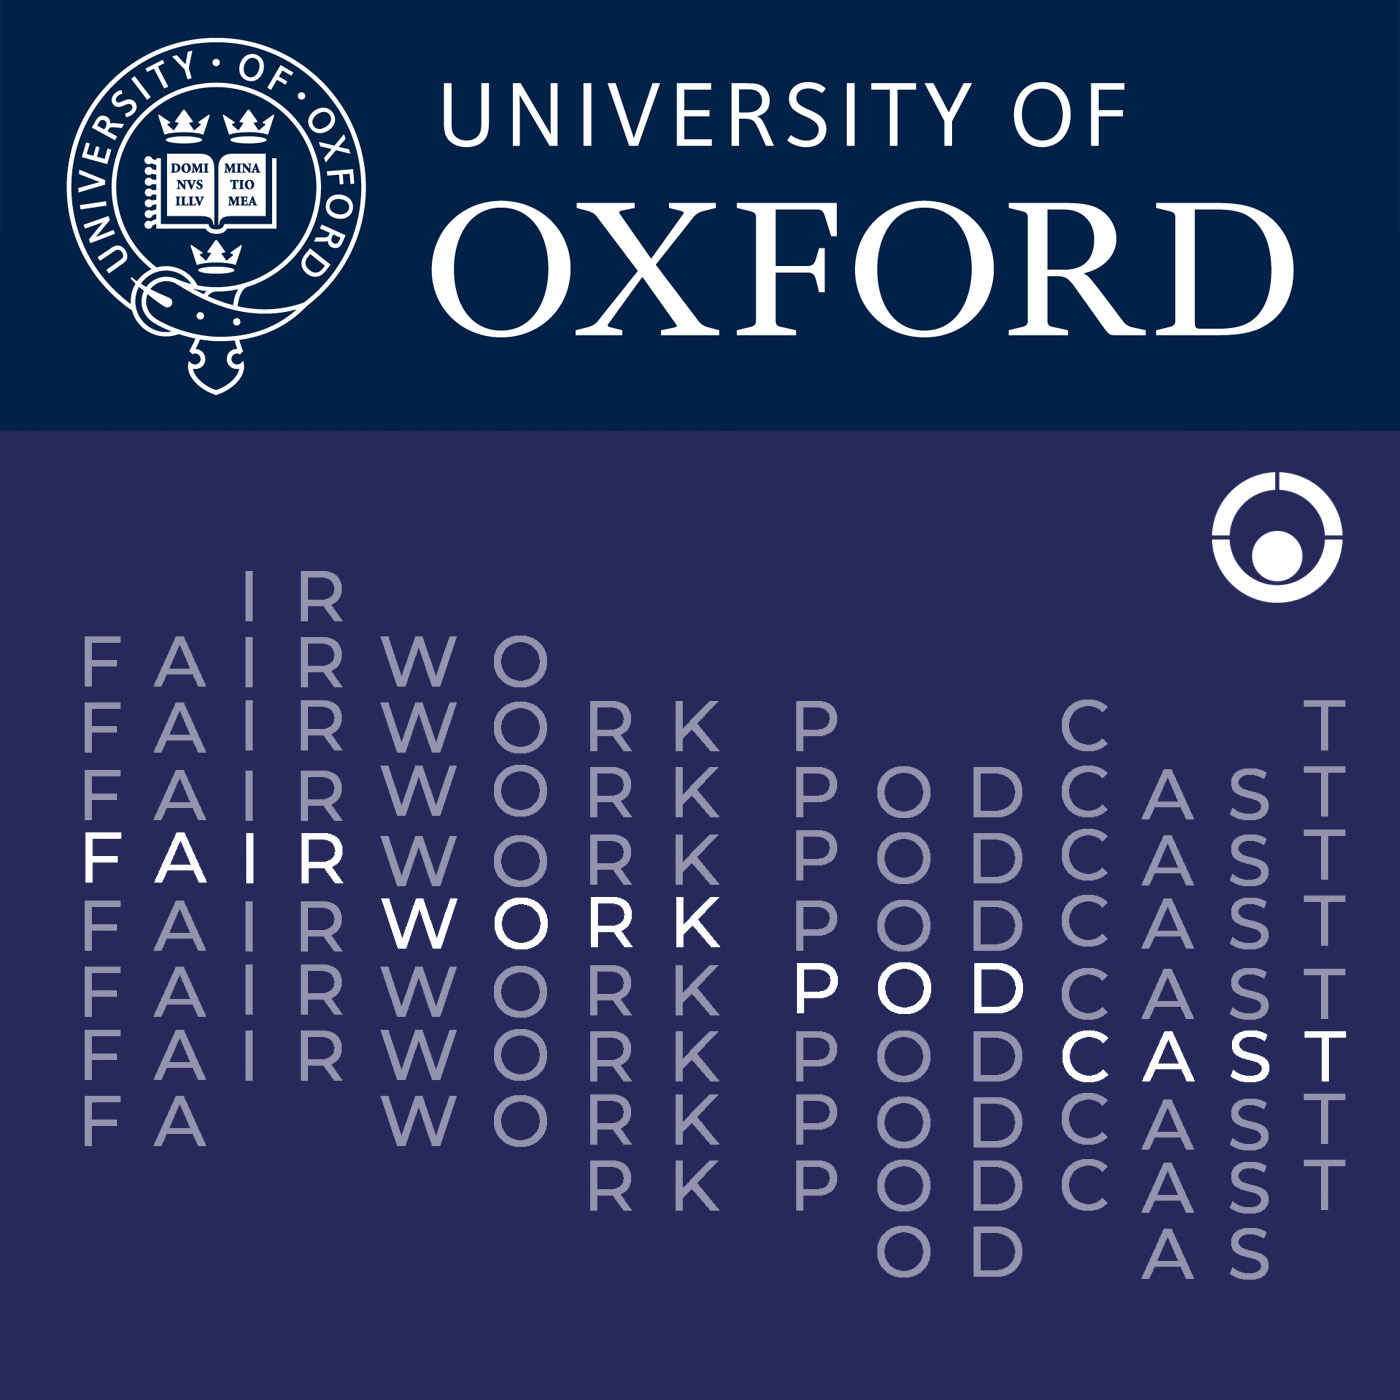 The Fairwork Podcast: Series 1